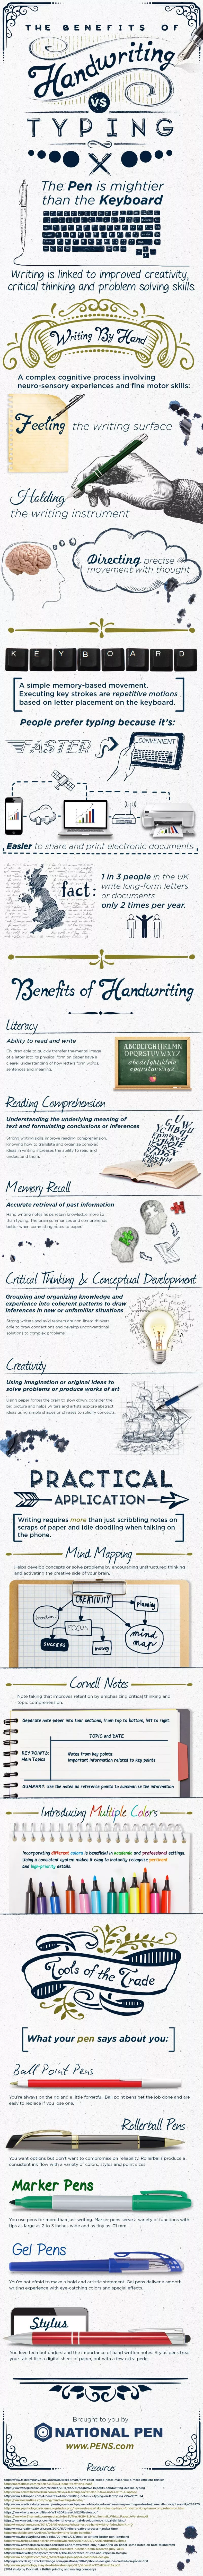 Benefits of Handwriting vs Typing Infographic